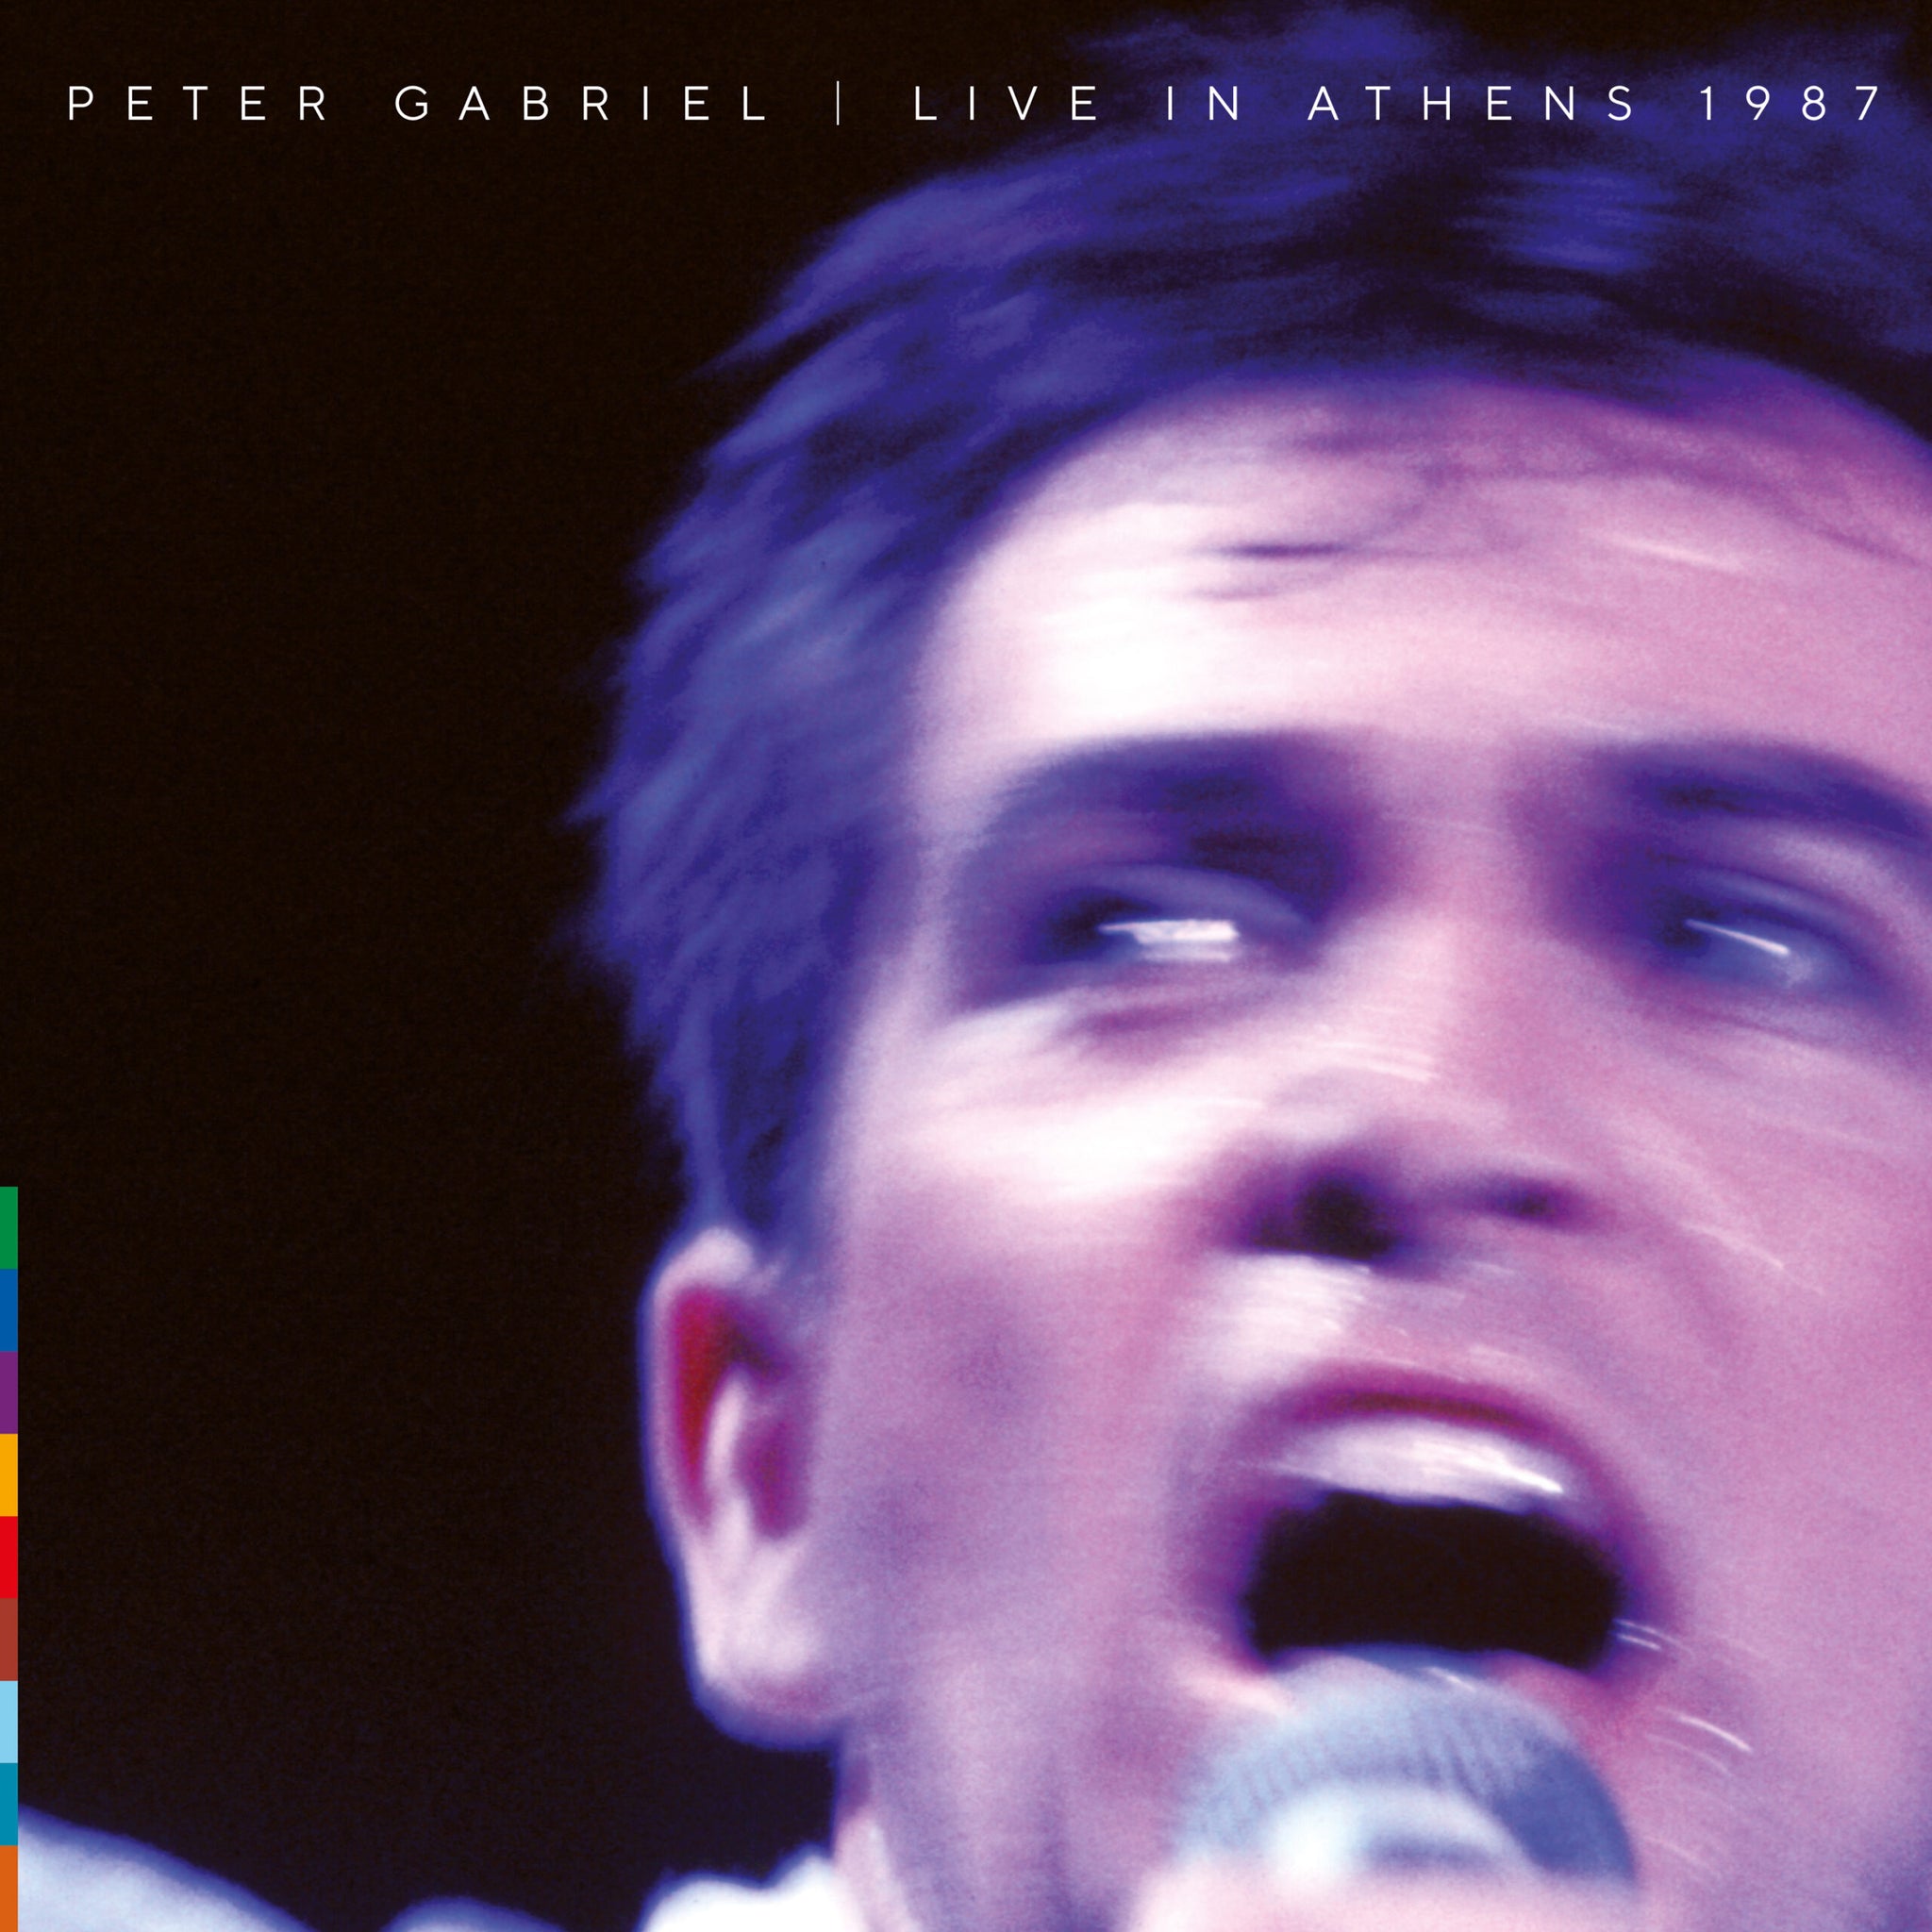 PETER GABRIEL - Live In Athens 1987 - 2LP - Vinyl [OCT 16th]